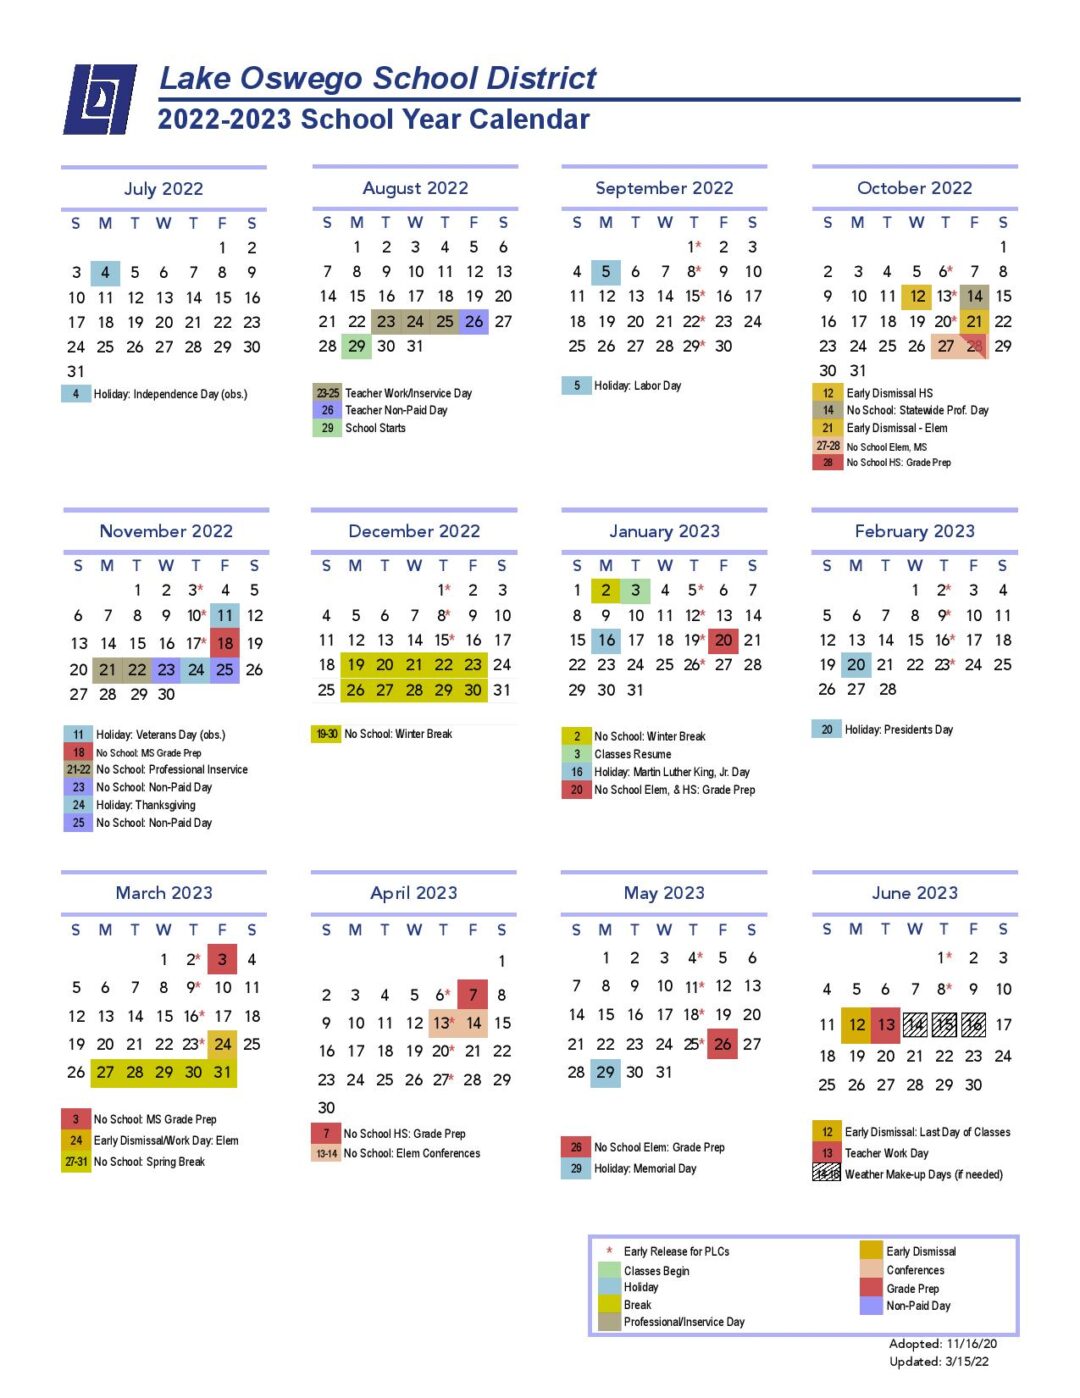 Lake Oswego School District Calendar 20222023 PDF